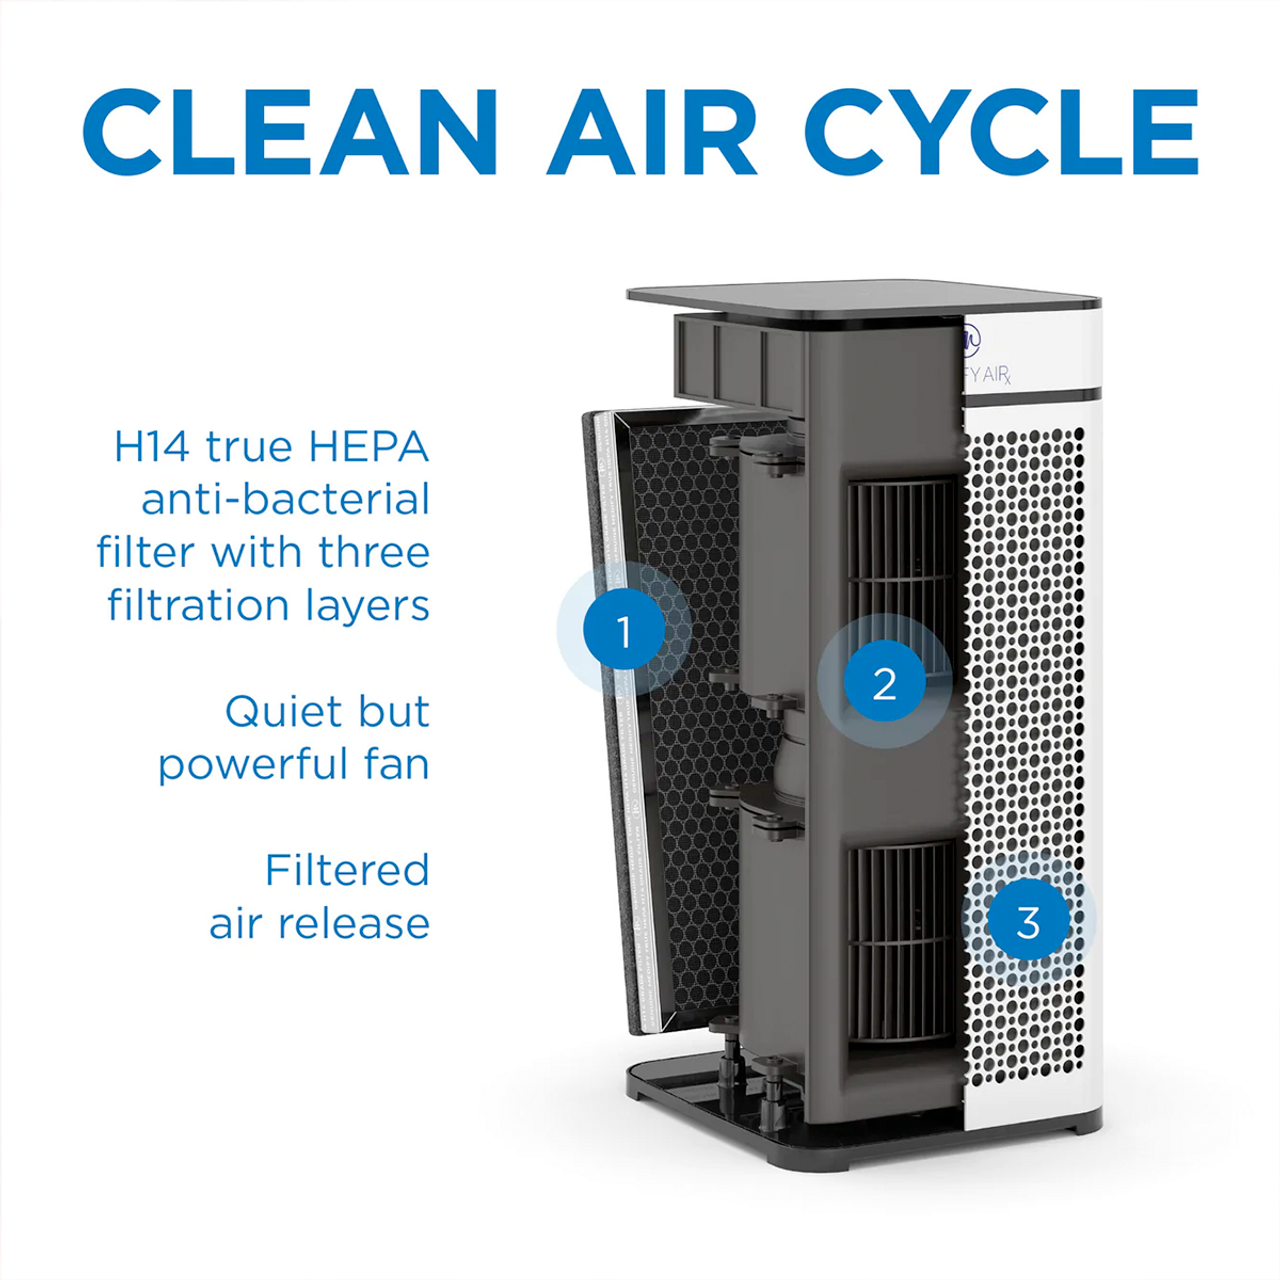 Clean Air Cycle